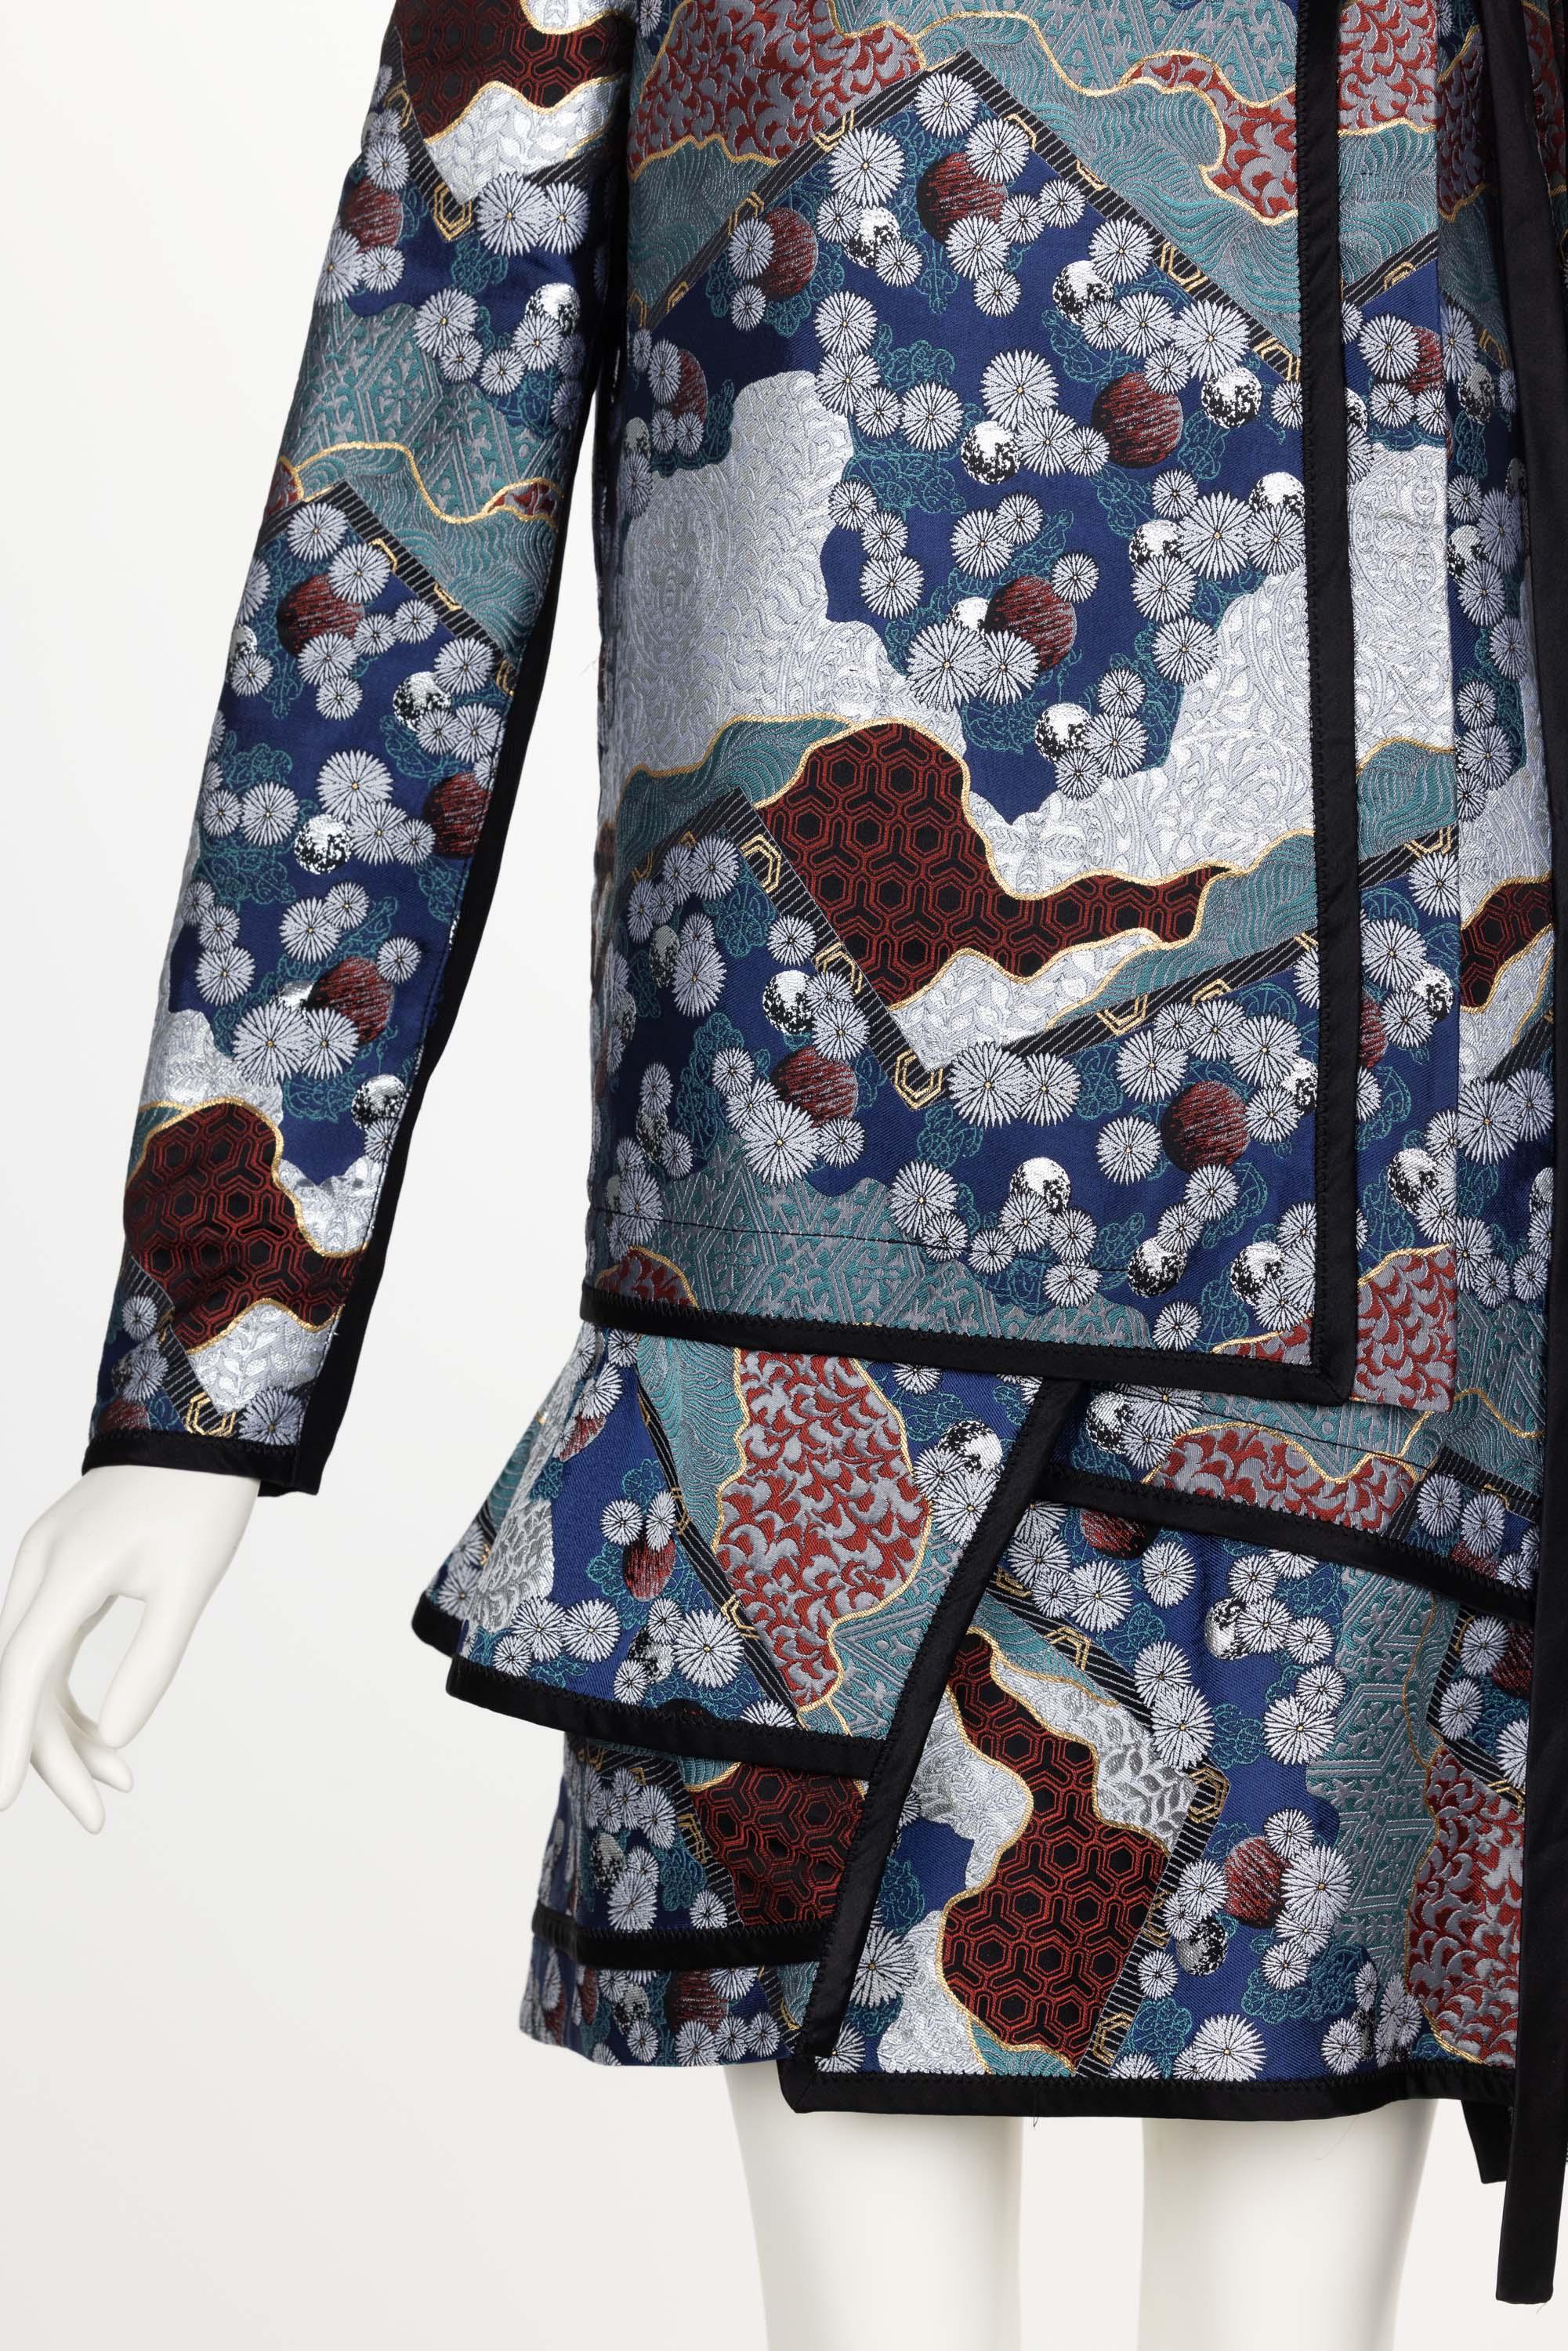 Proenza Schouler Fall 2012 Brocade Dress / Coat For Sale 7